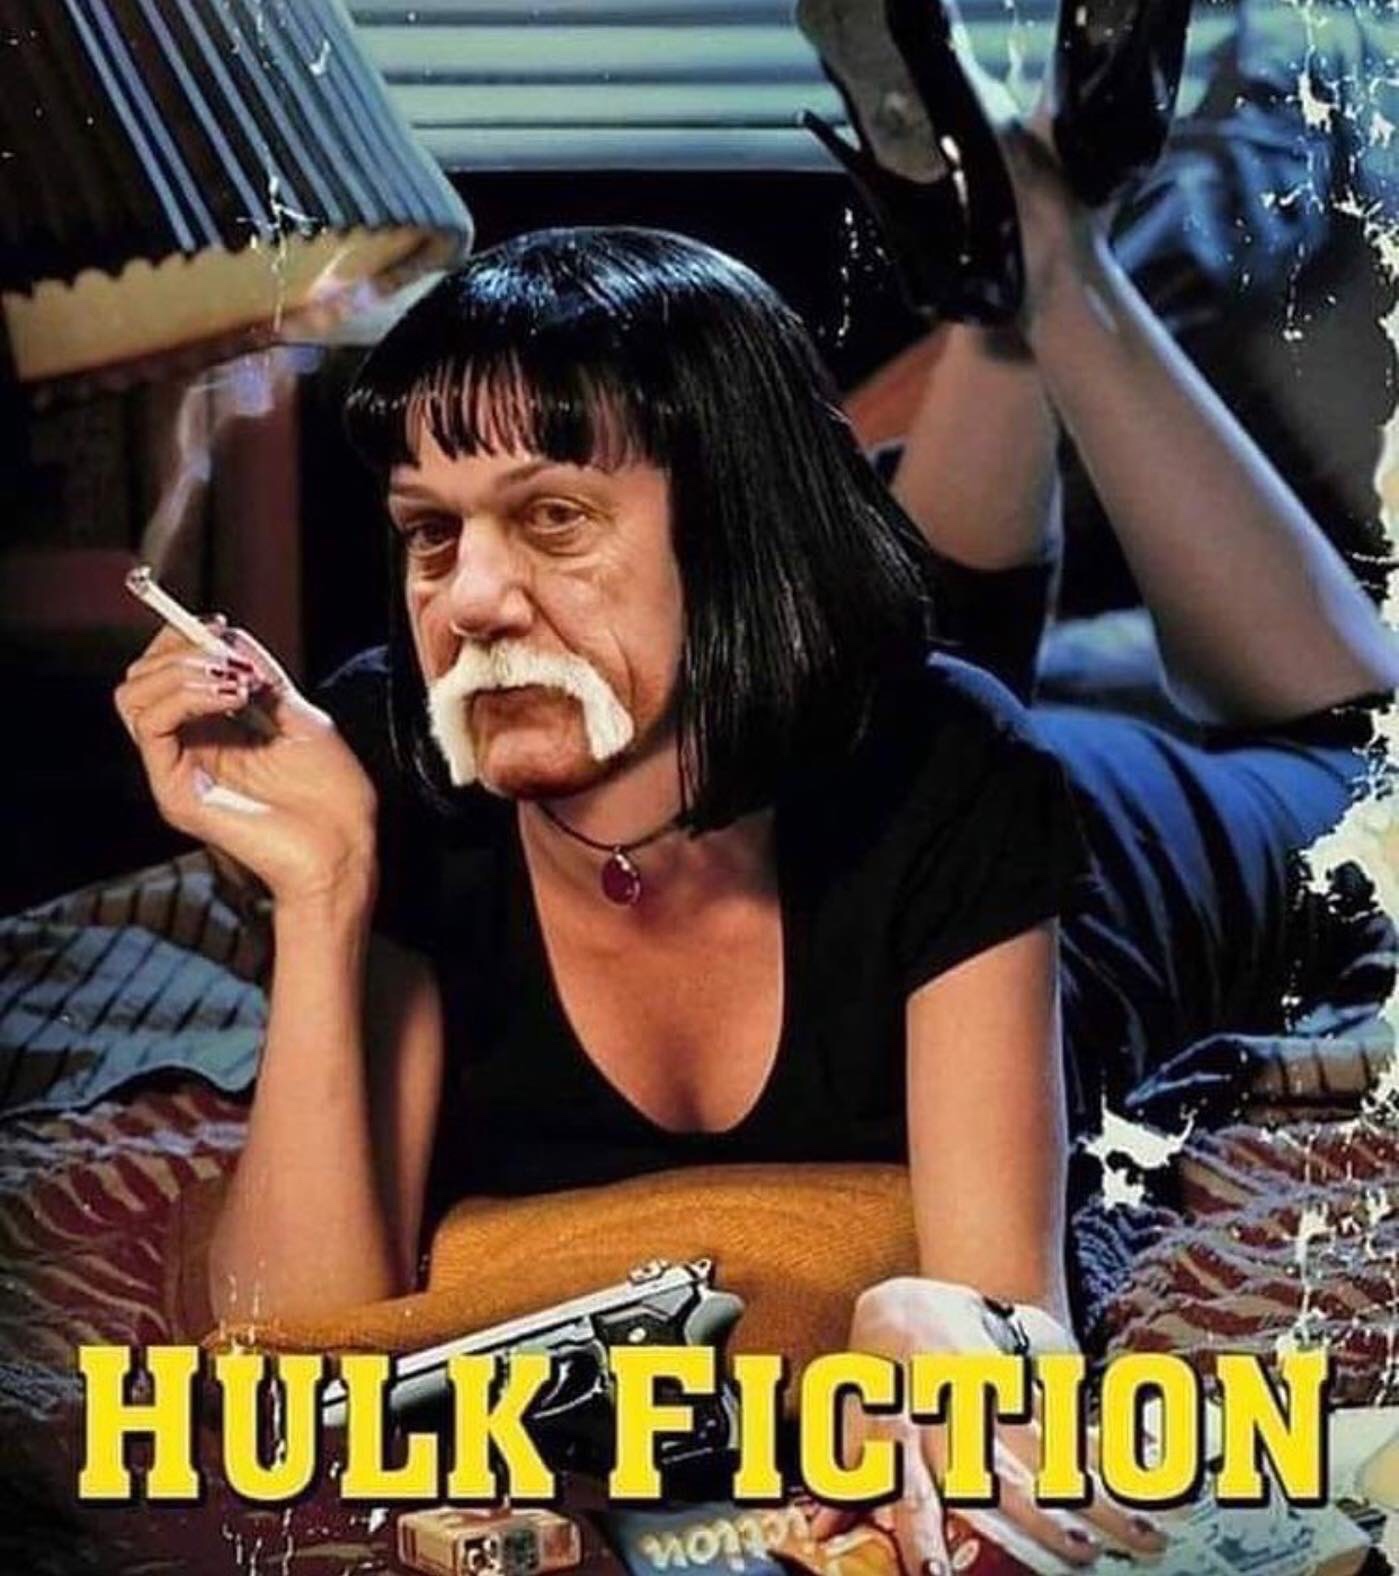 pulp fiction soundtrack cover - Hulk Fiction